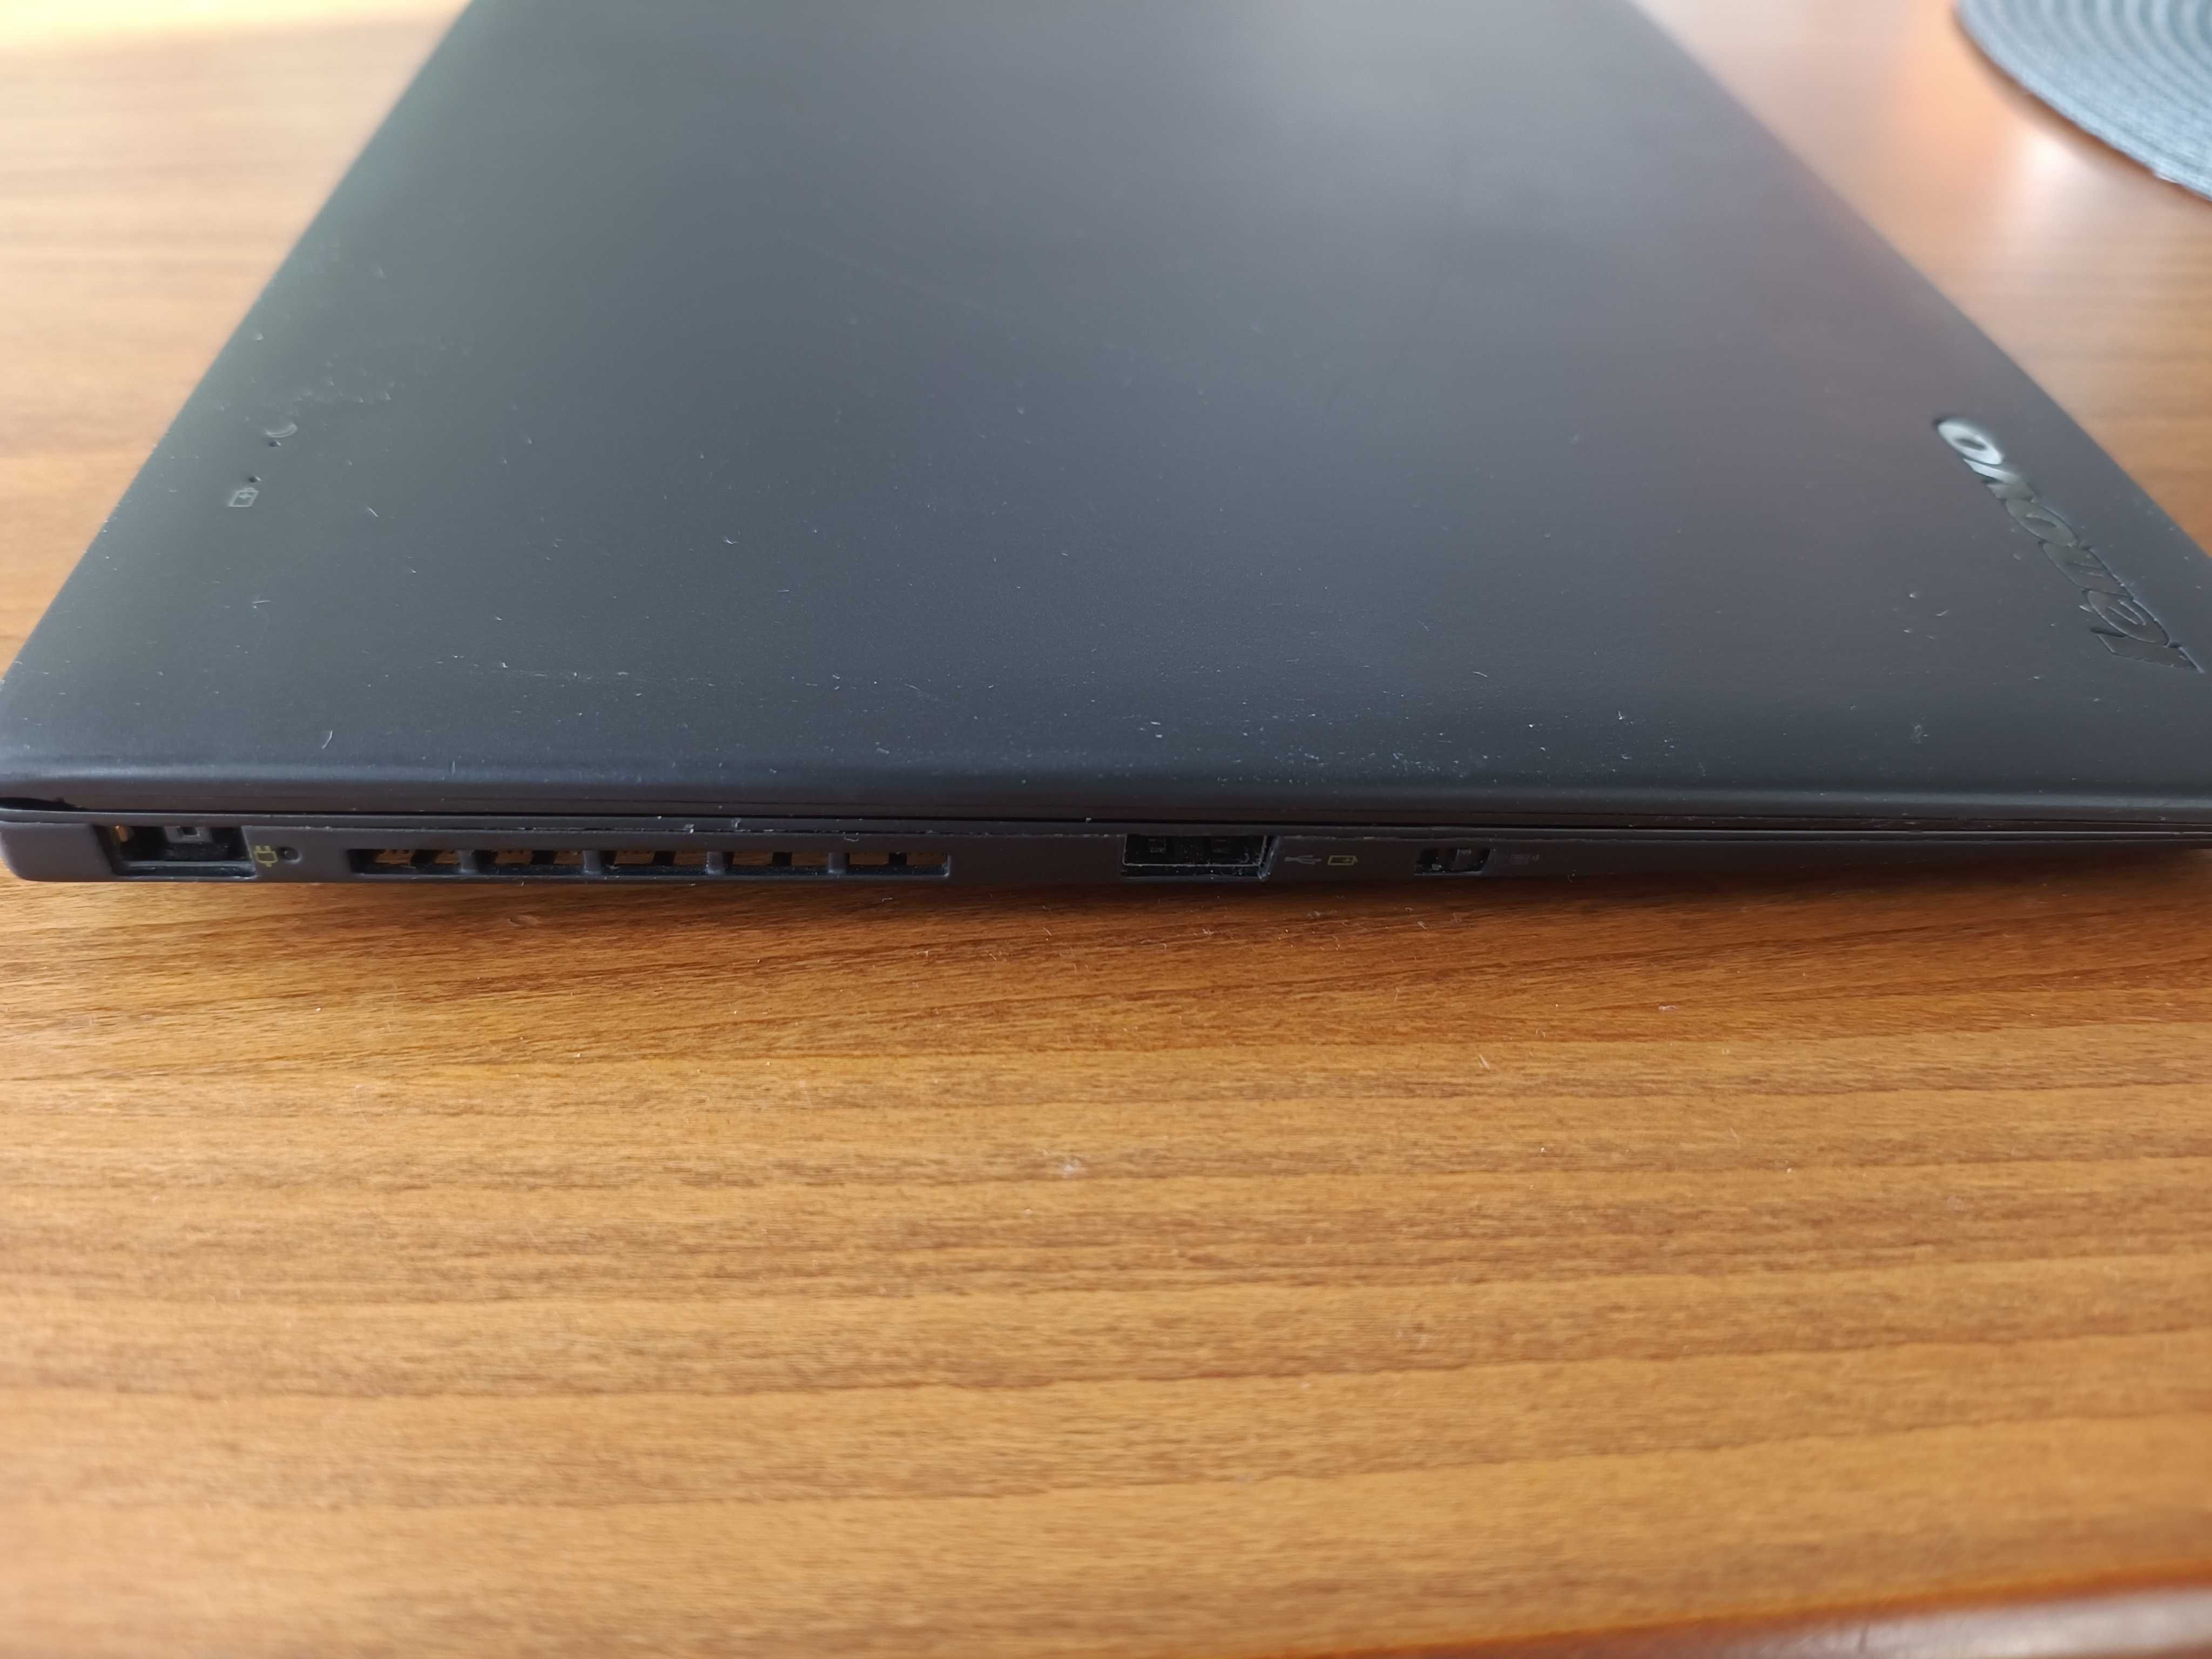 Ultrabook Lenovo ThinkPad X1 Carbon